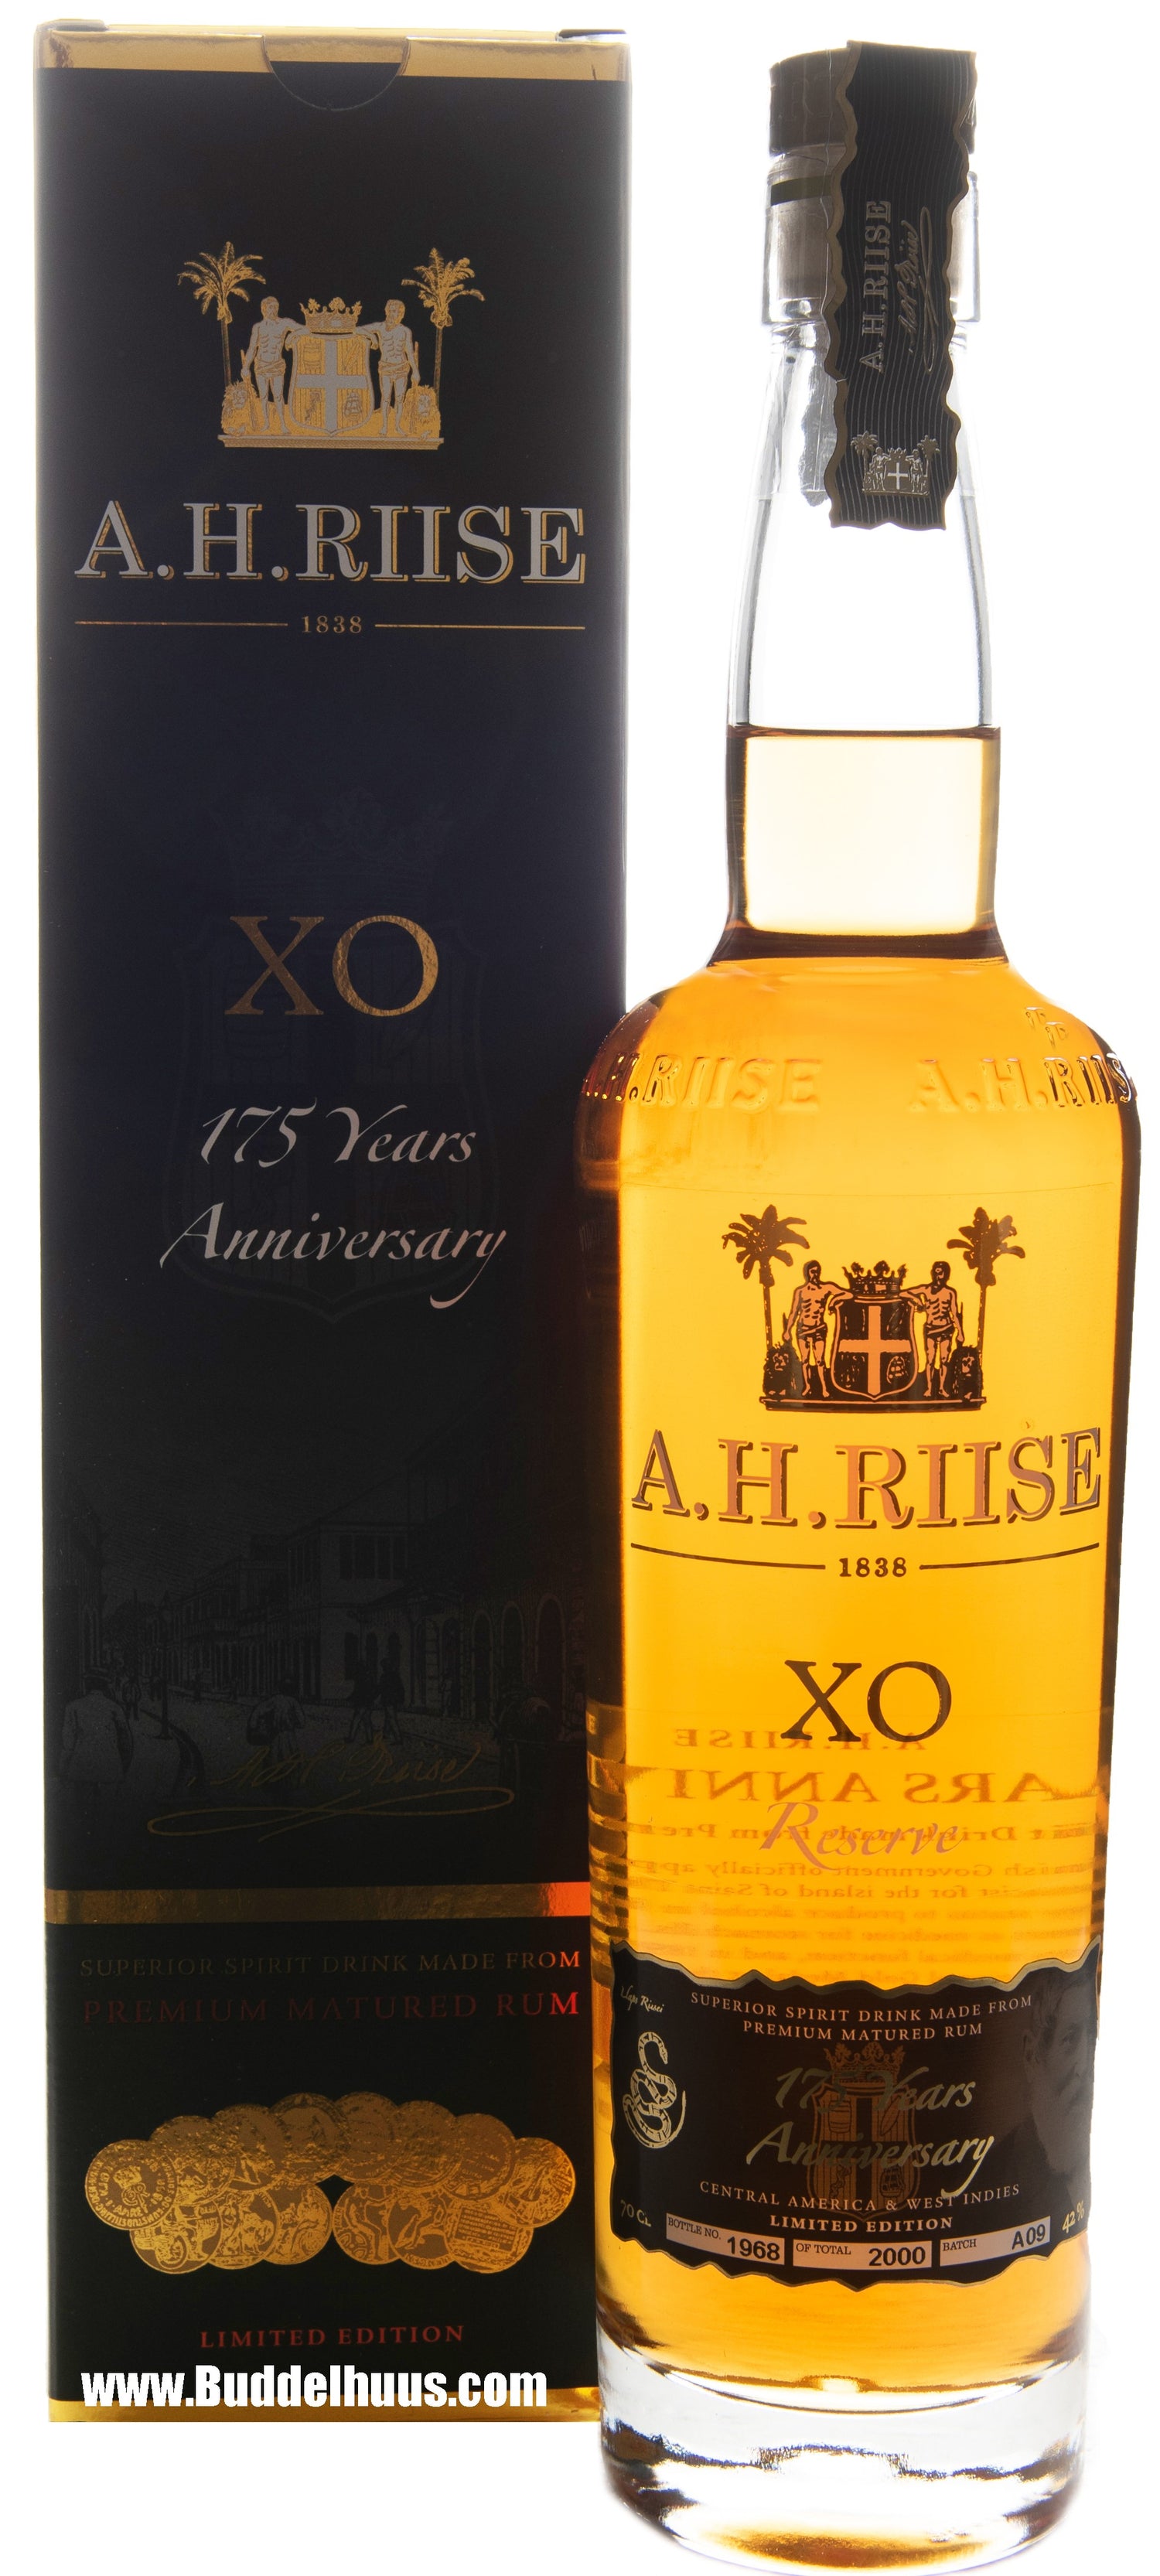 AH Riise XO Reserve 175 Years Anniversary